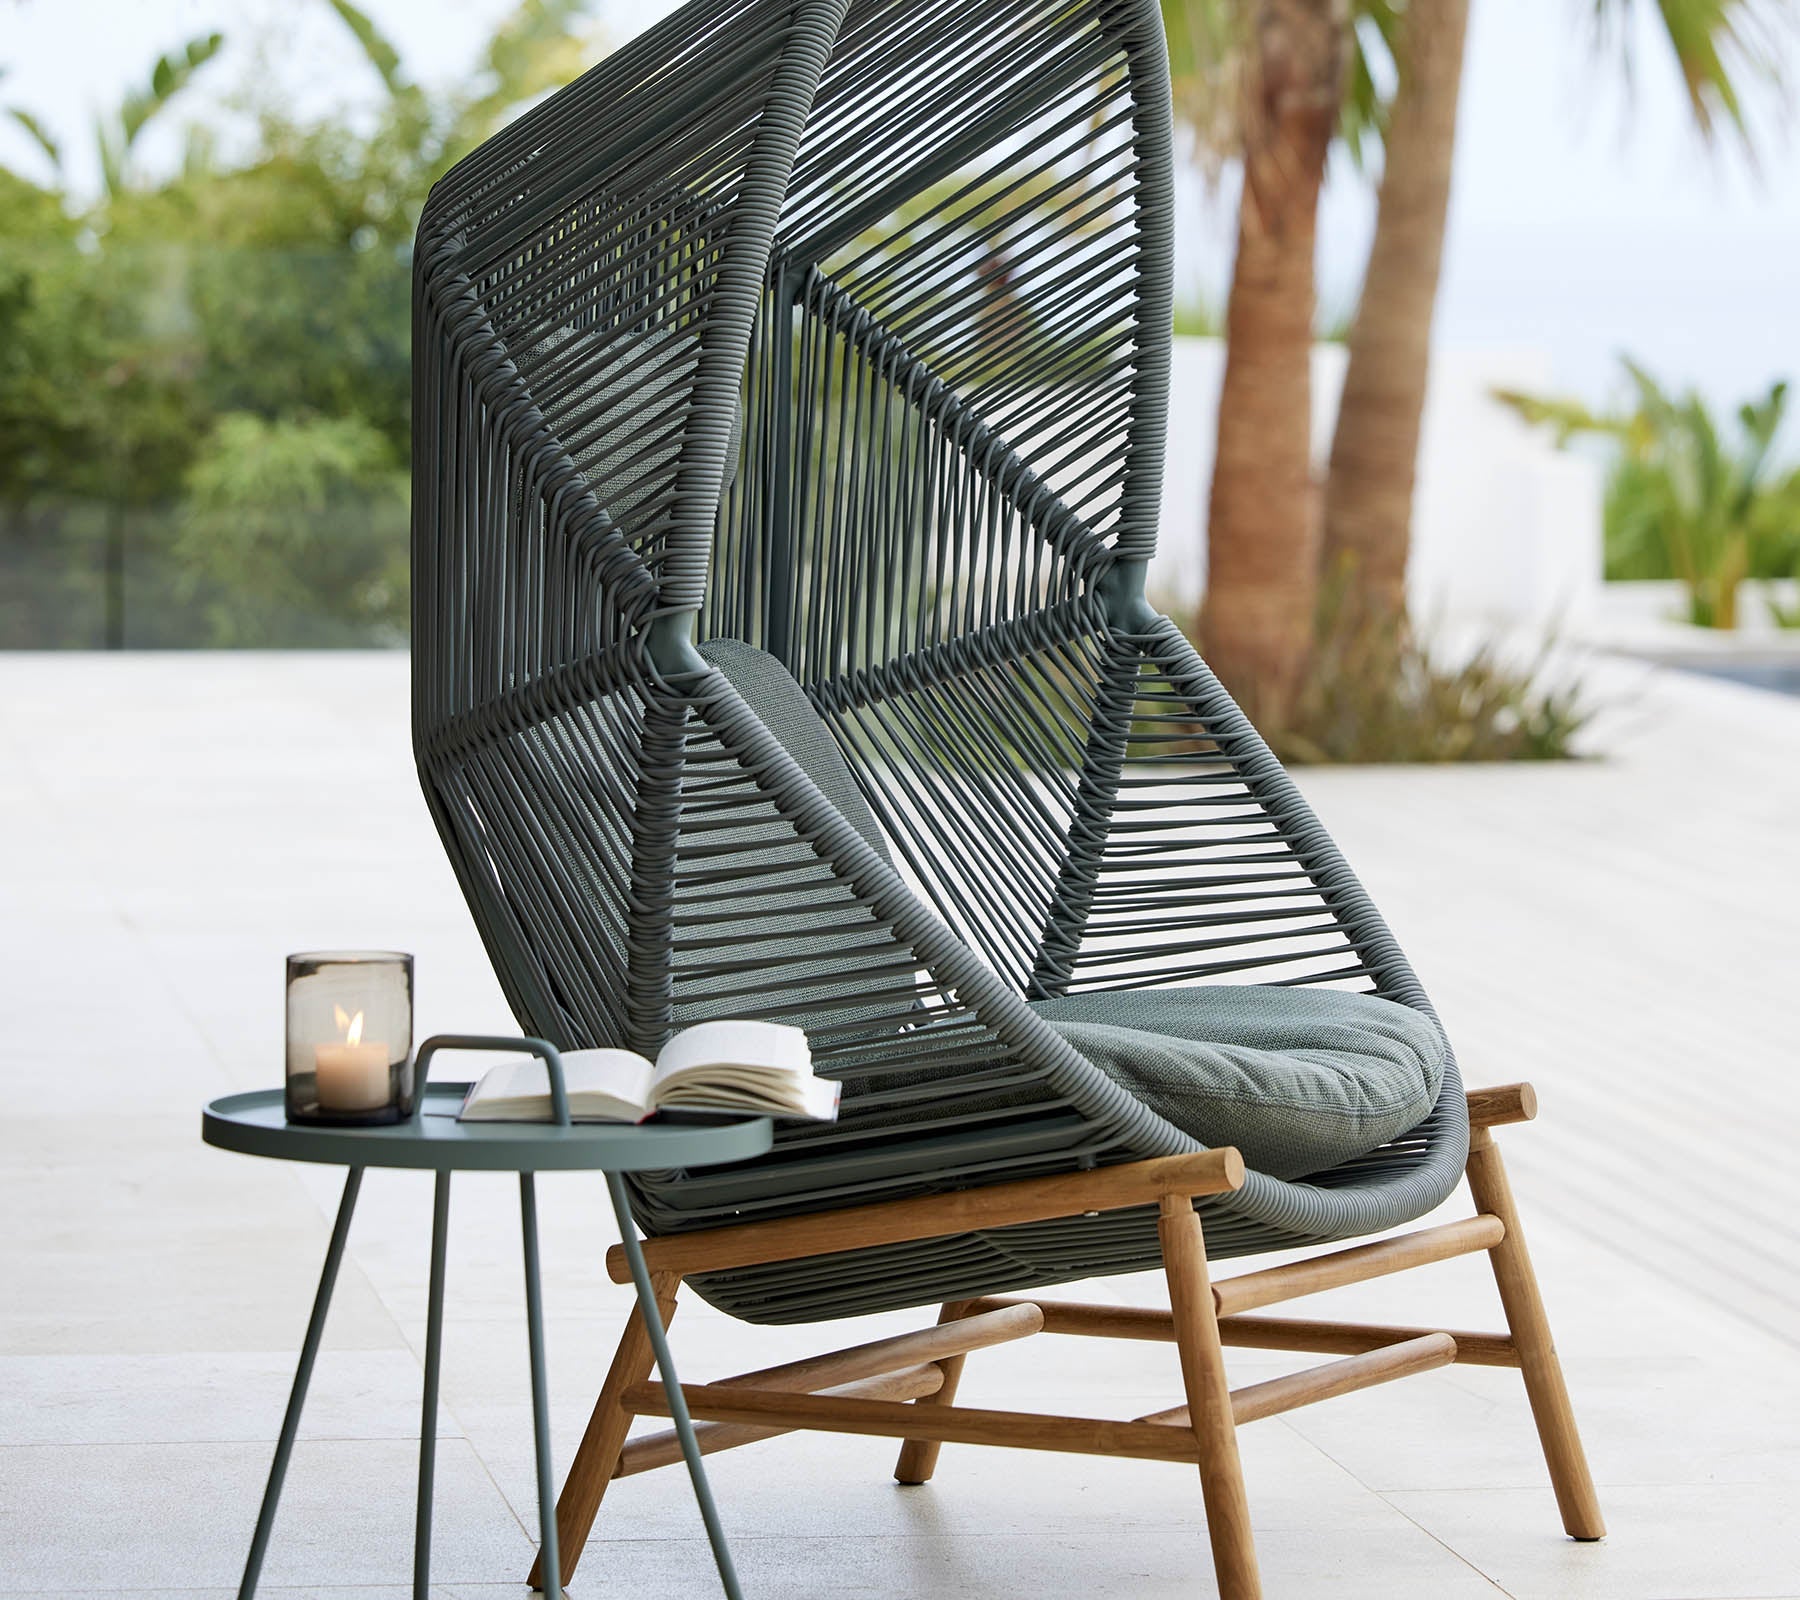 Cane-line - Neck cushion, Hive highback chair - 54700NCY15X